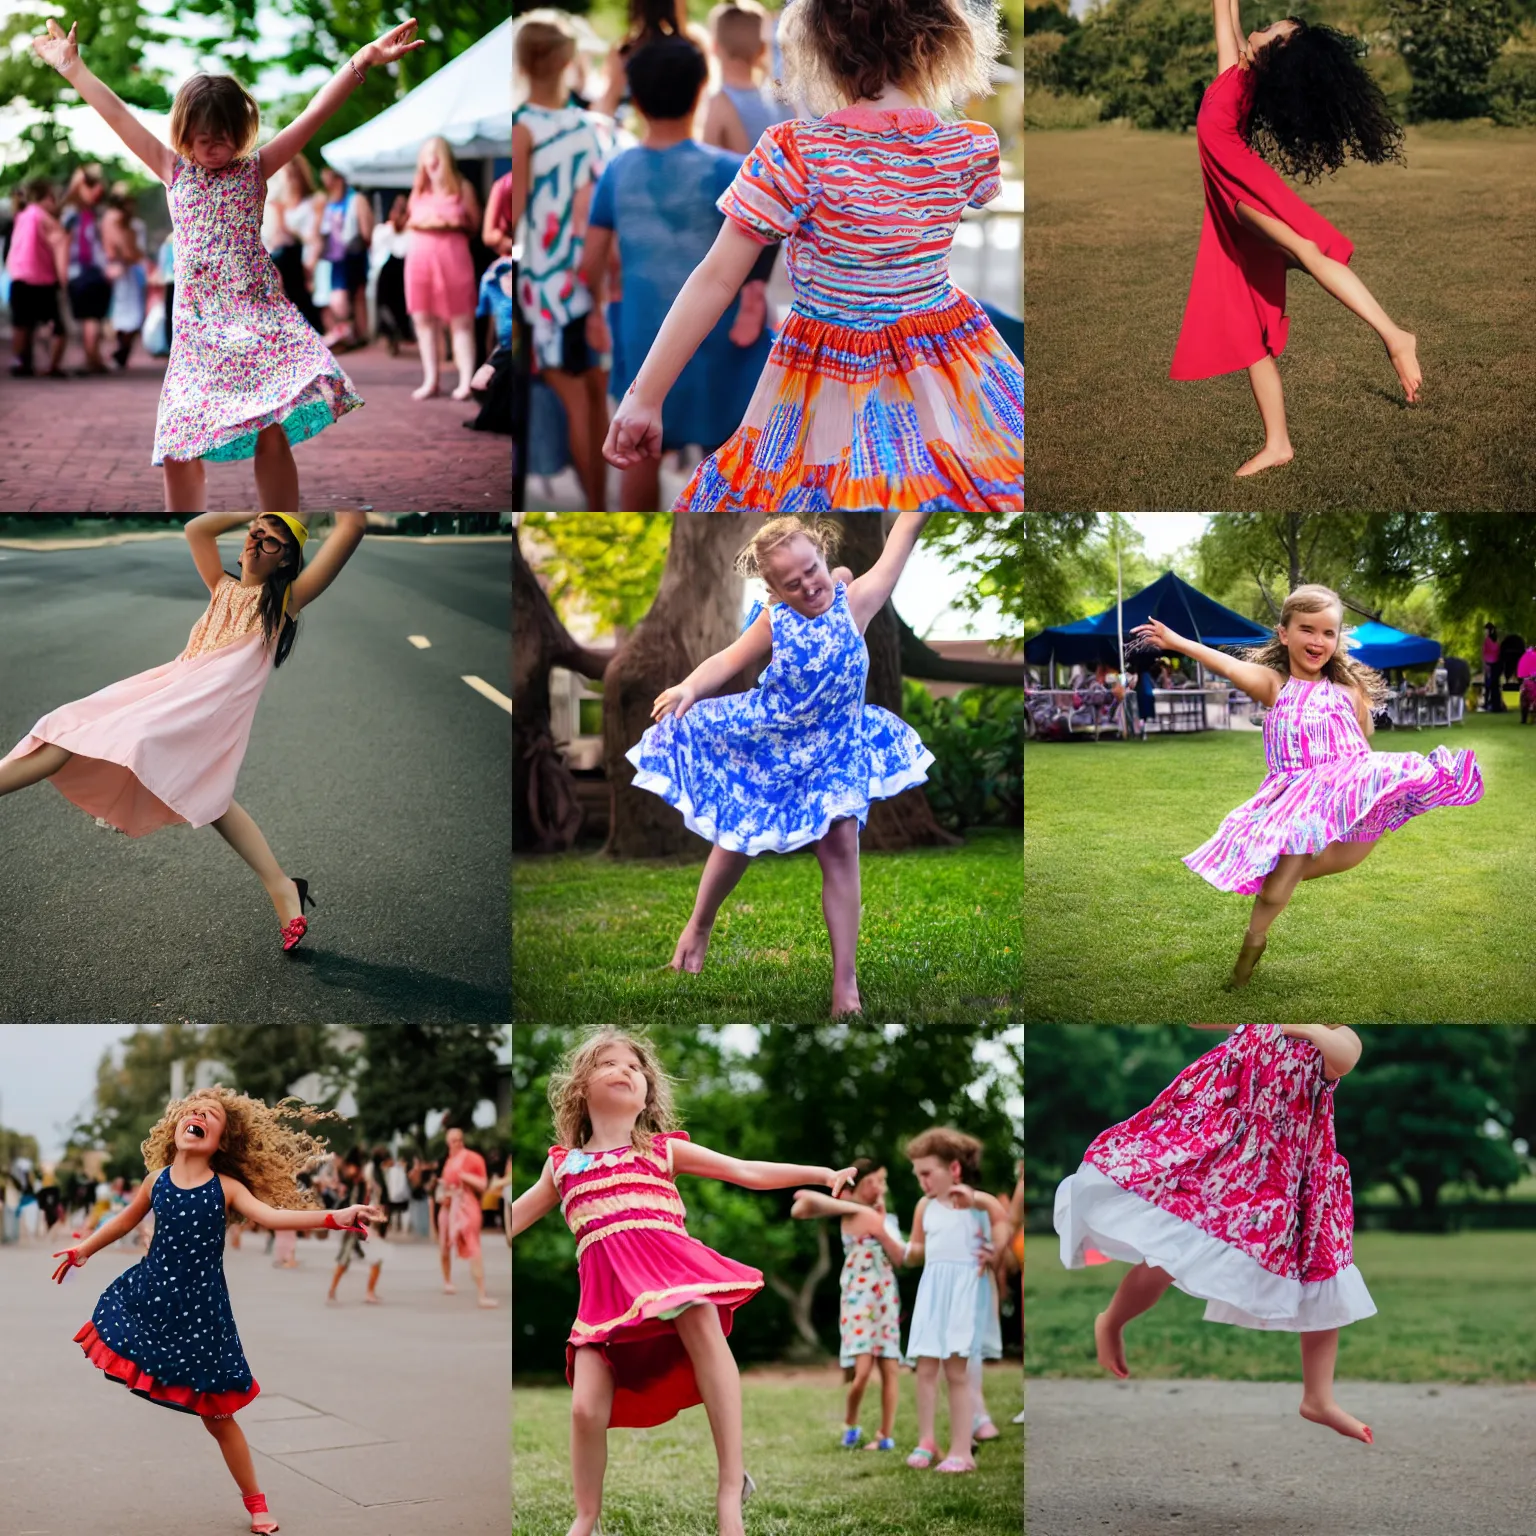 Prompt: a girl wearing a summer dress upside down dancing